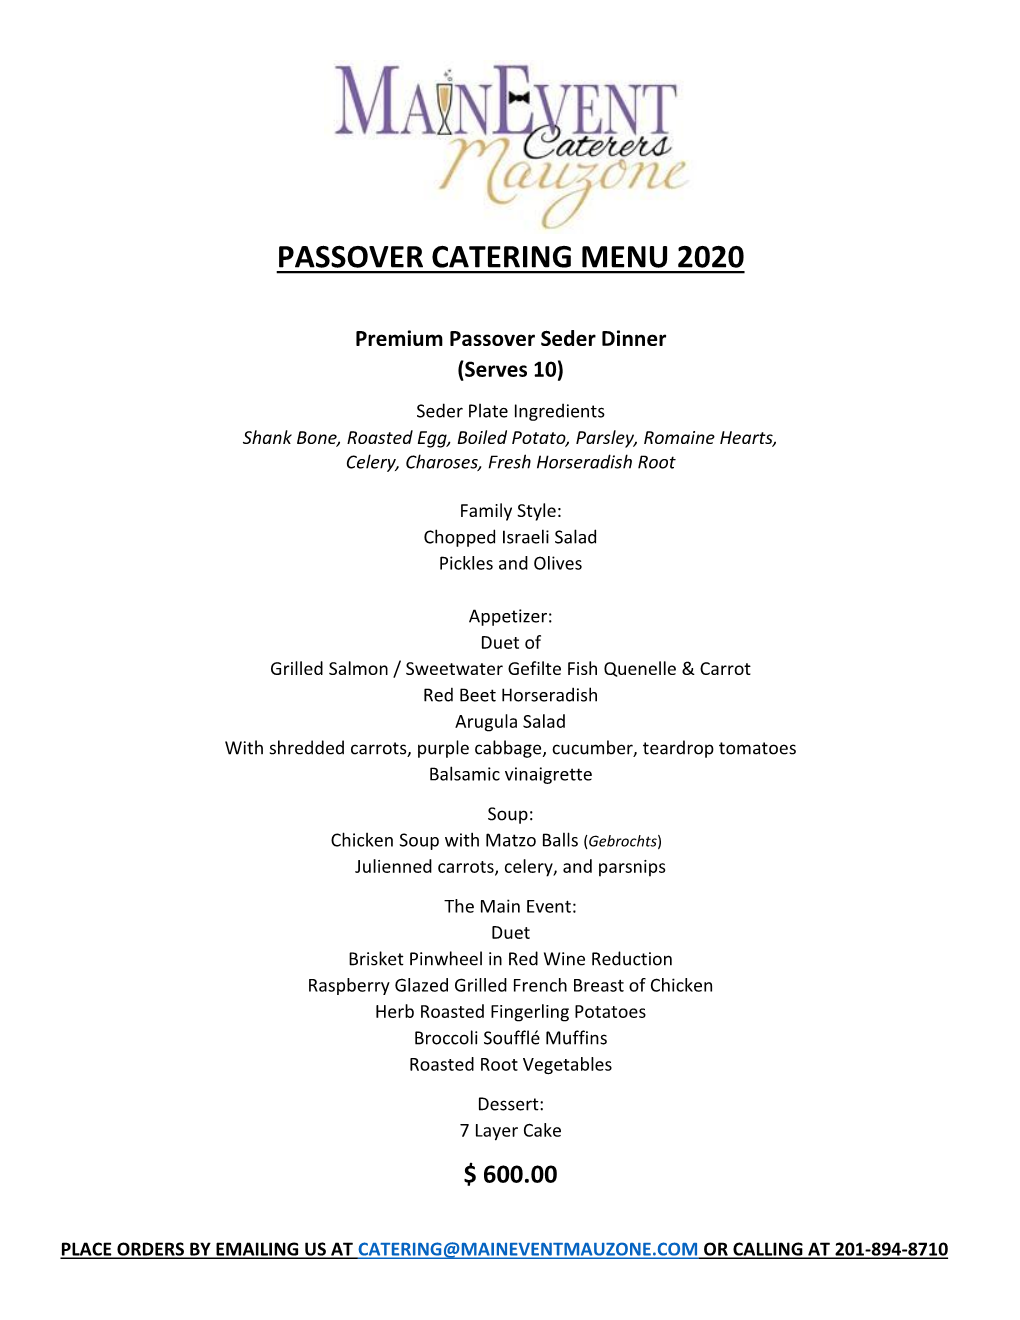 Passover Catering Menu 2020